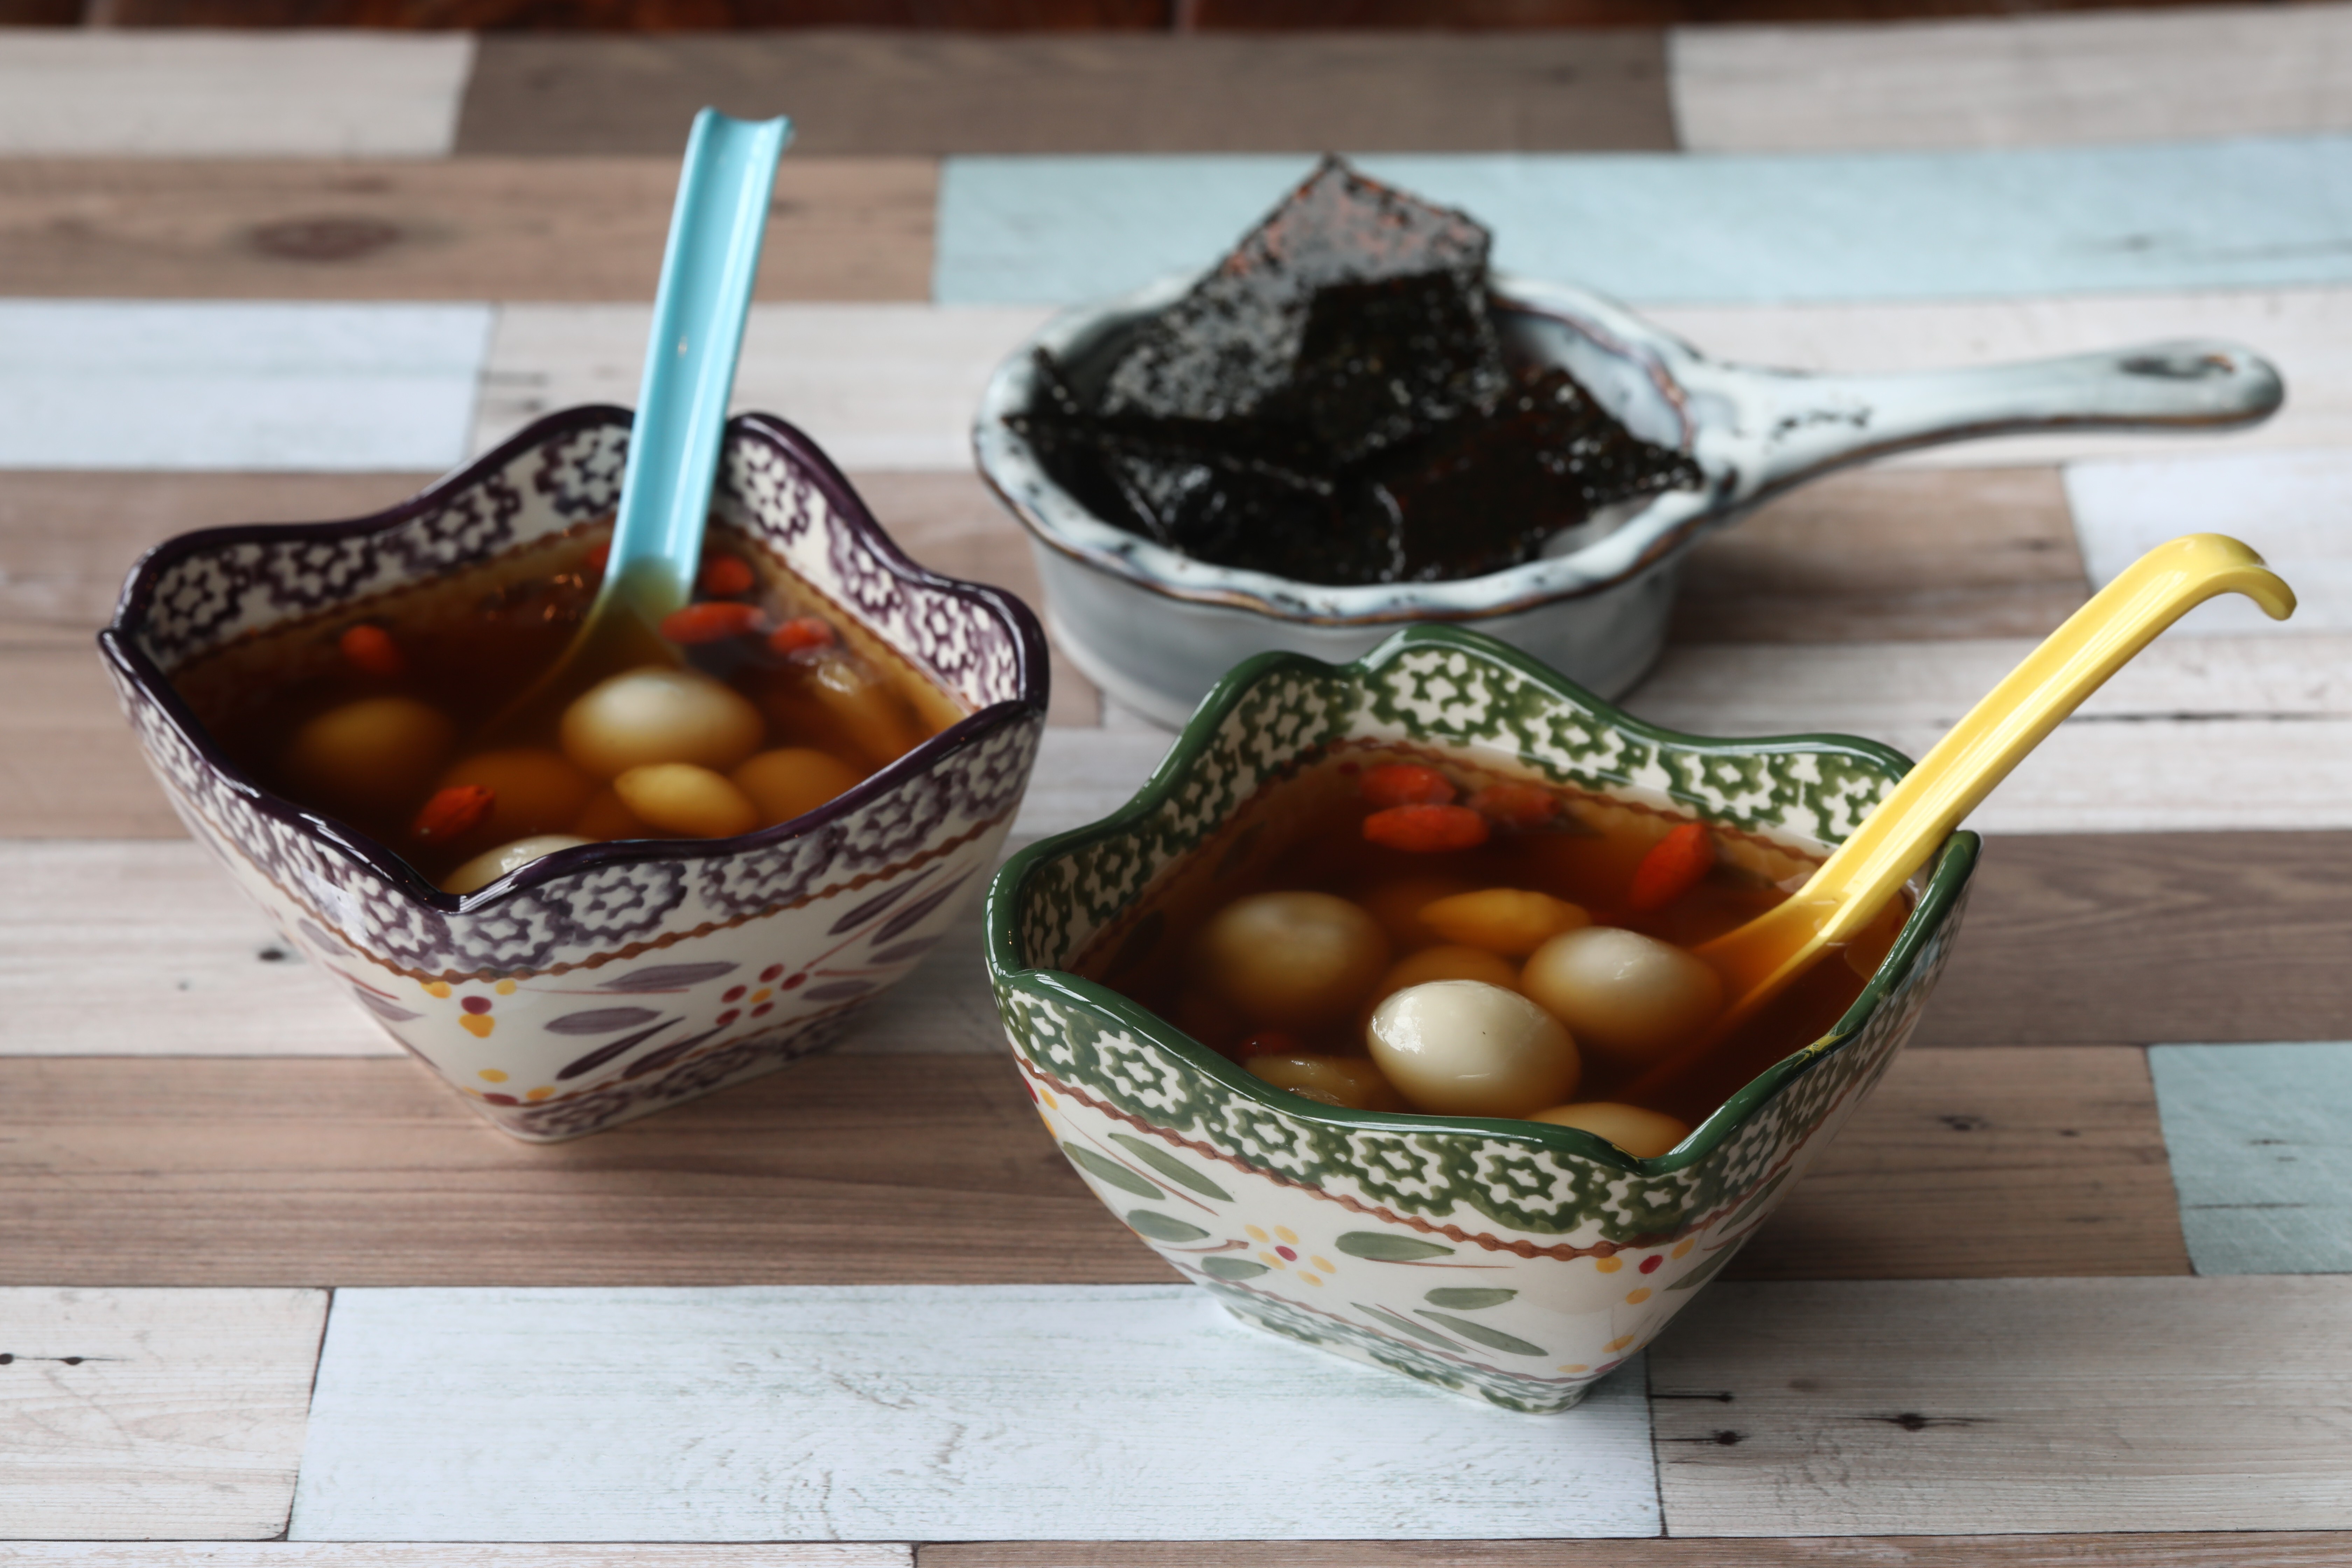 Tang Yuan Recipe - How to Make Tang Yuan (Glutinous Rice Balls)